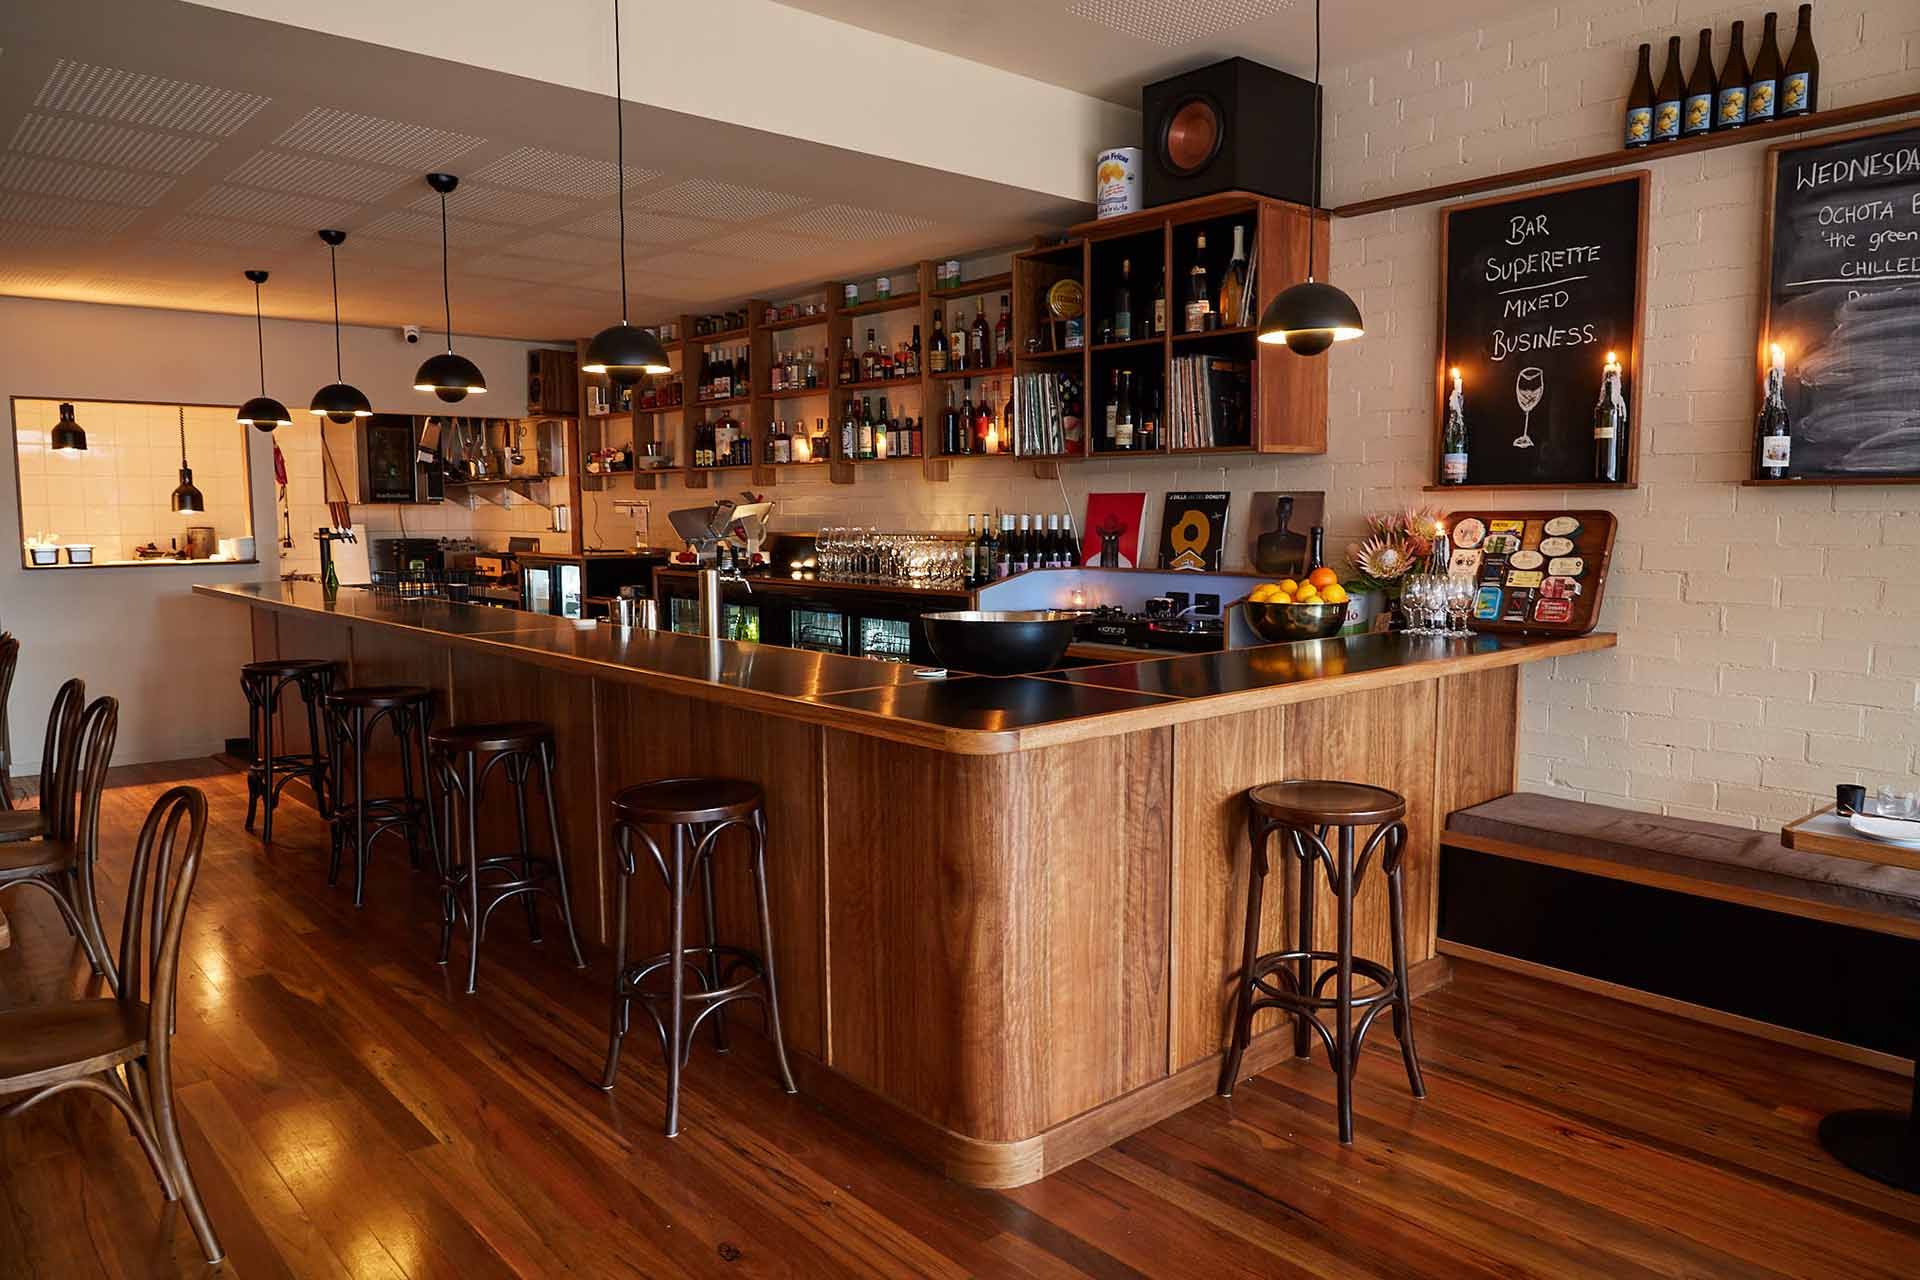 Wine bar in Merimbula, NSW - Bar Superette